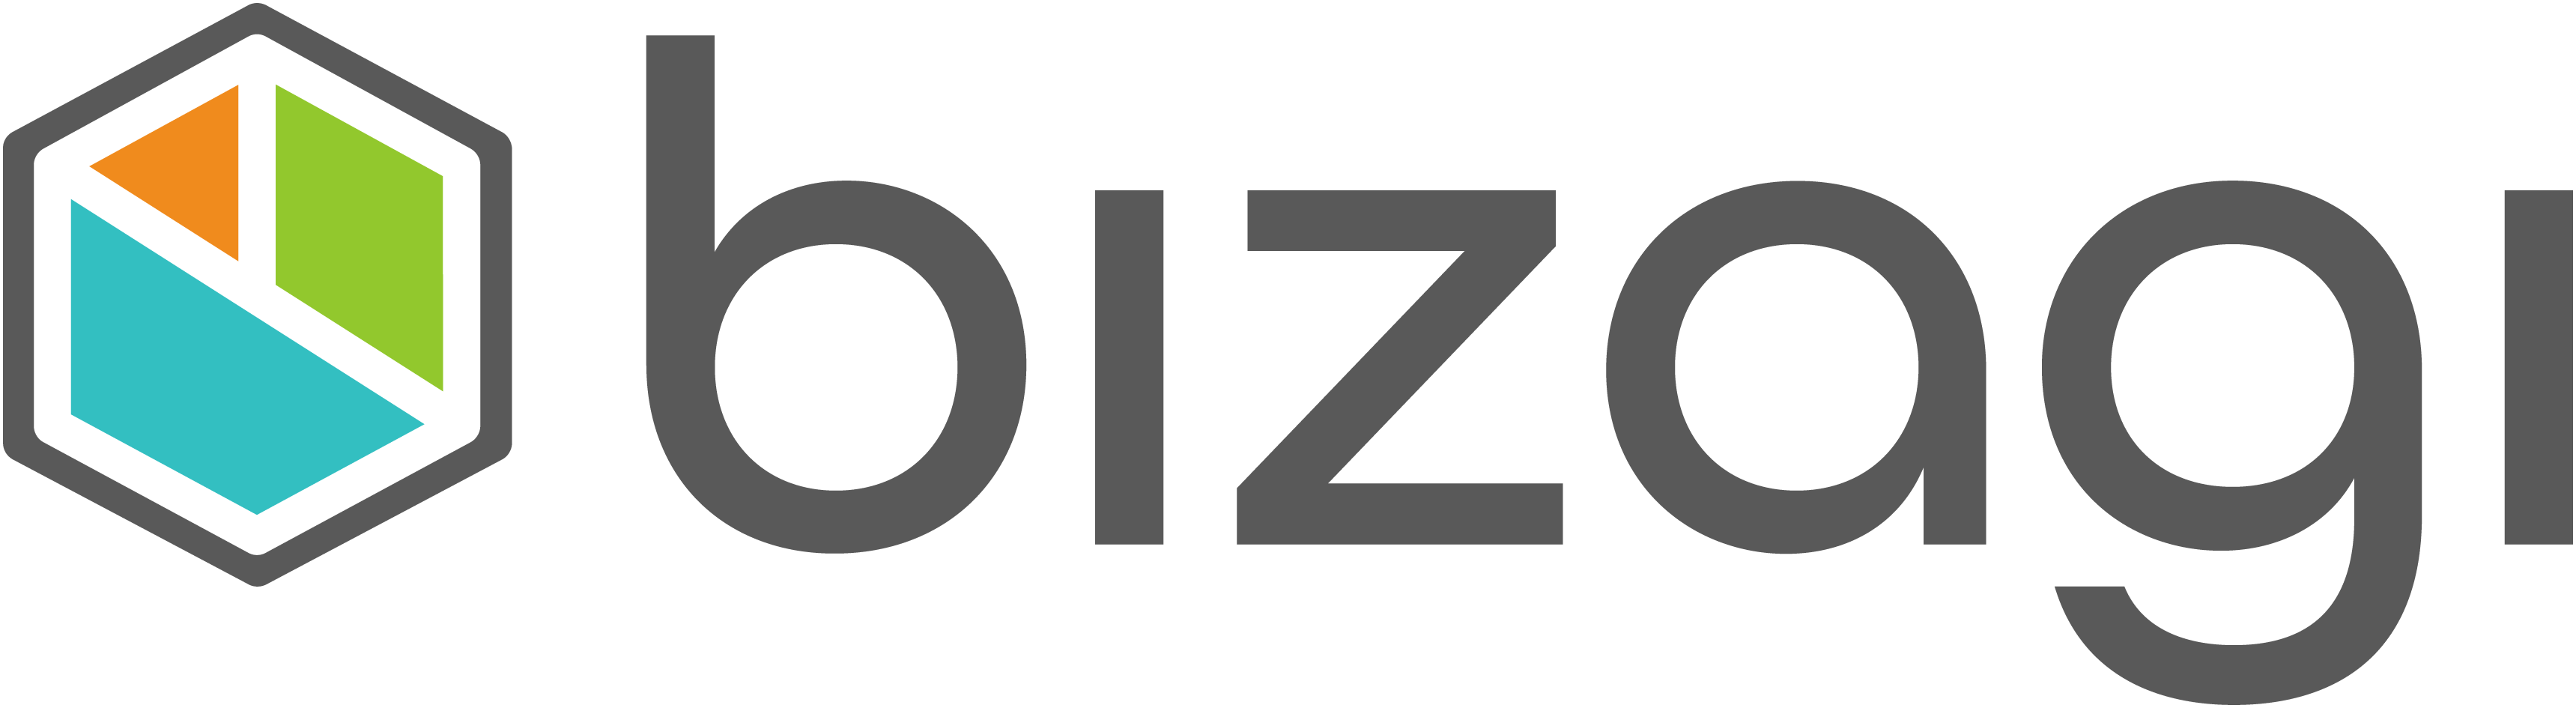 Bizagi logo landscape.jpg